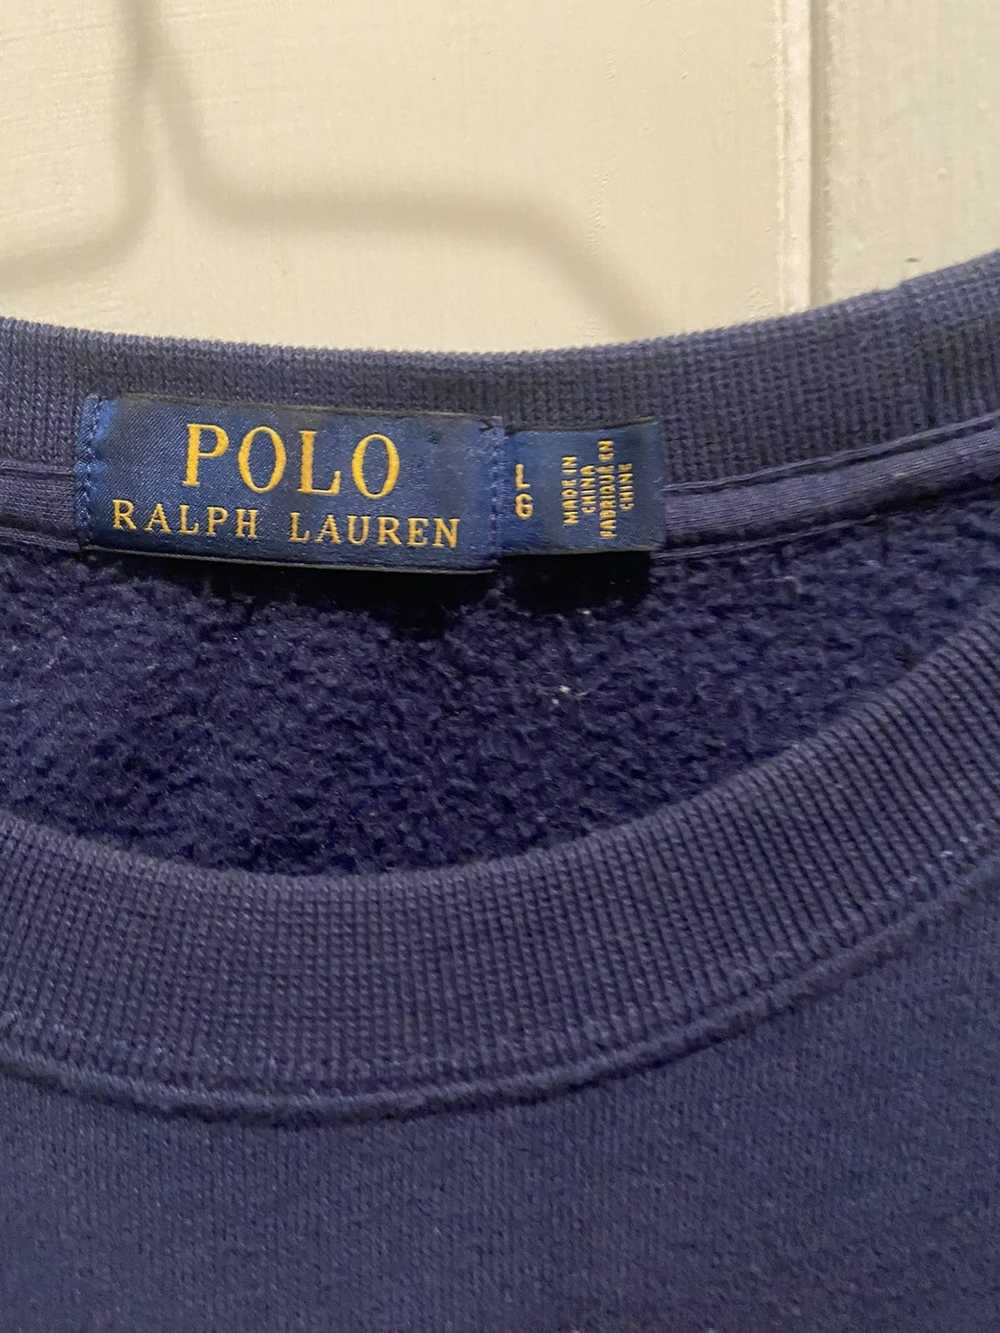 Polo Ralph Lauren Rare Vintage Ralph Lauren Polo … - image 3